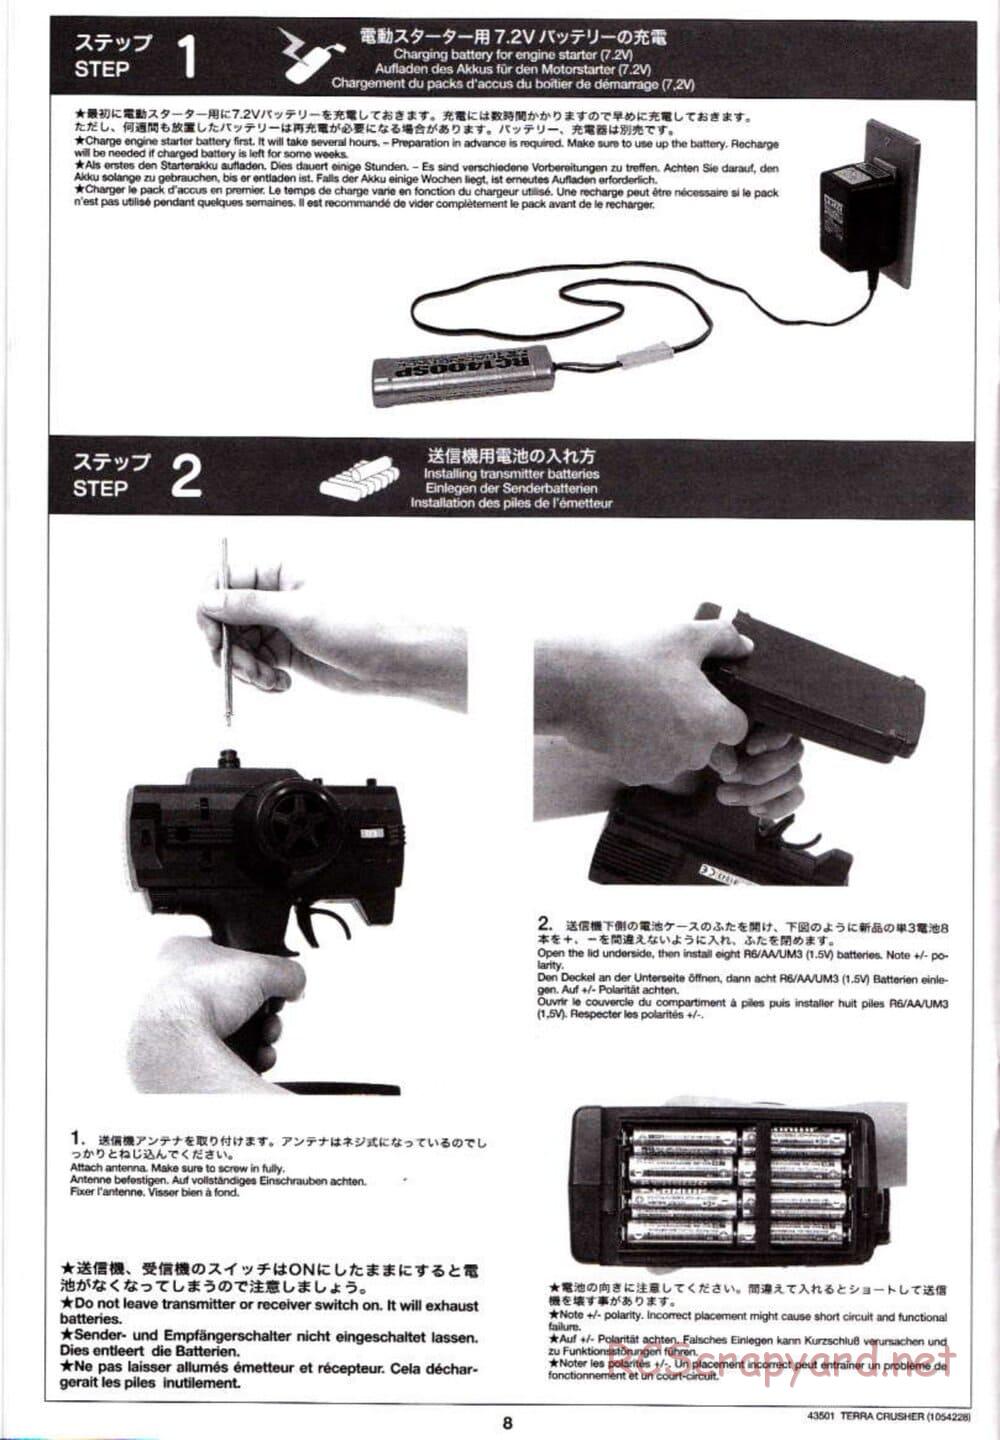 Tamiya - Terra Crusher - TGM-02 Chassis - Manual - Page 8